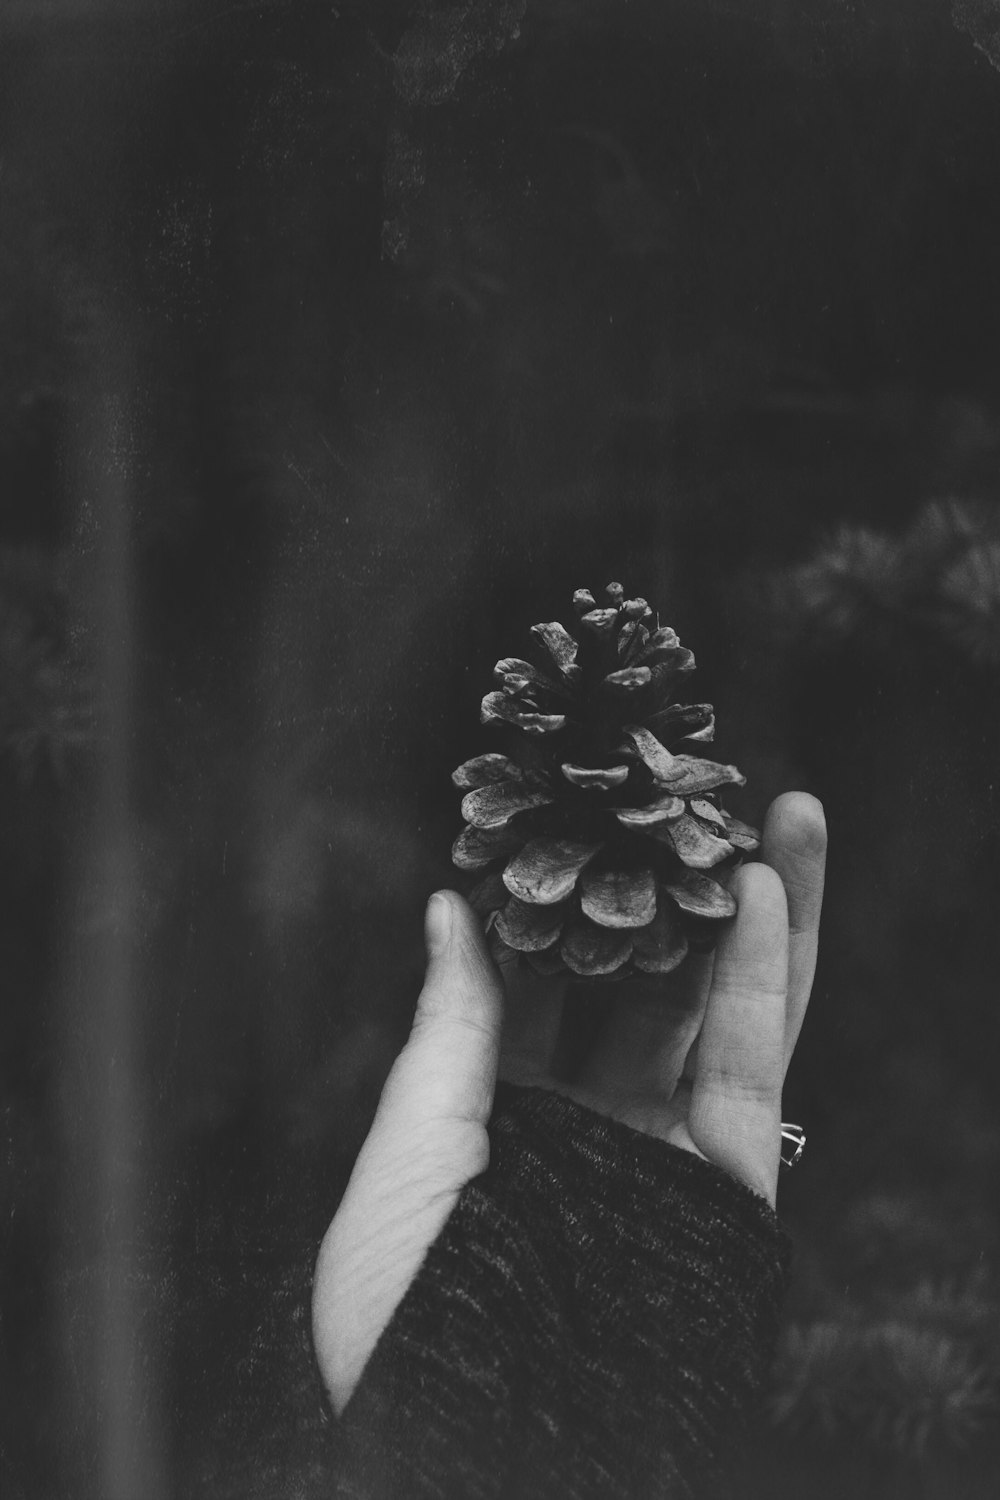 Foto en escala de grises de una bellota en la mano de una persona